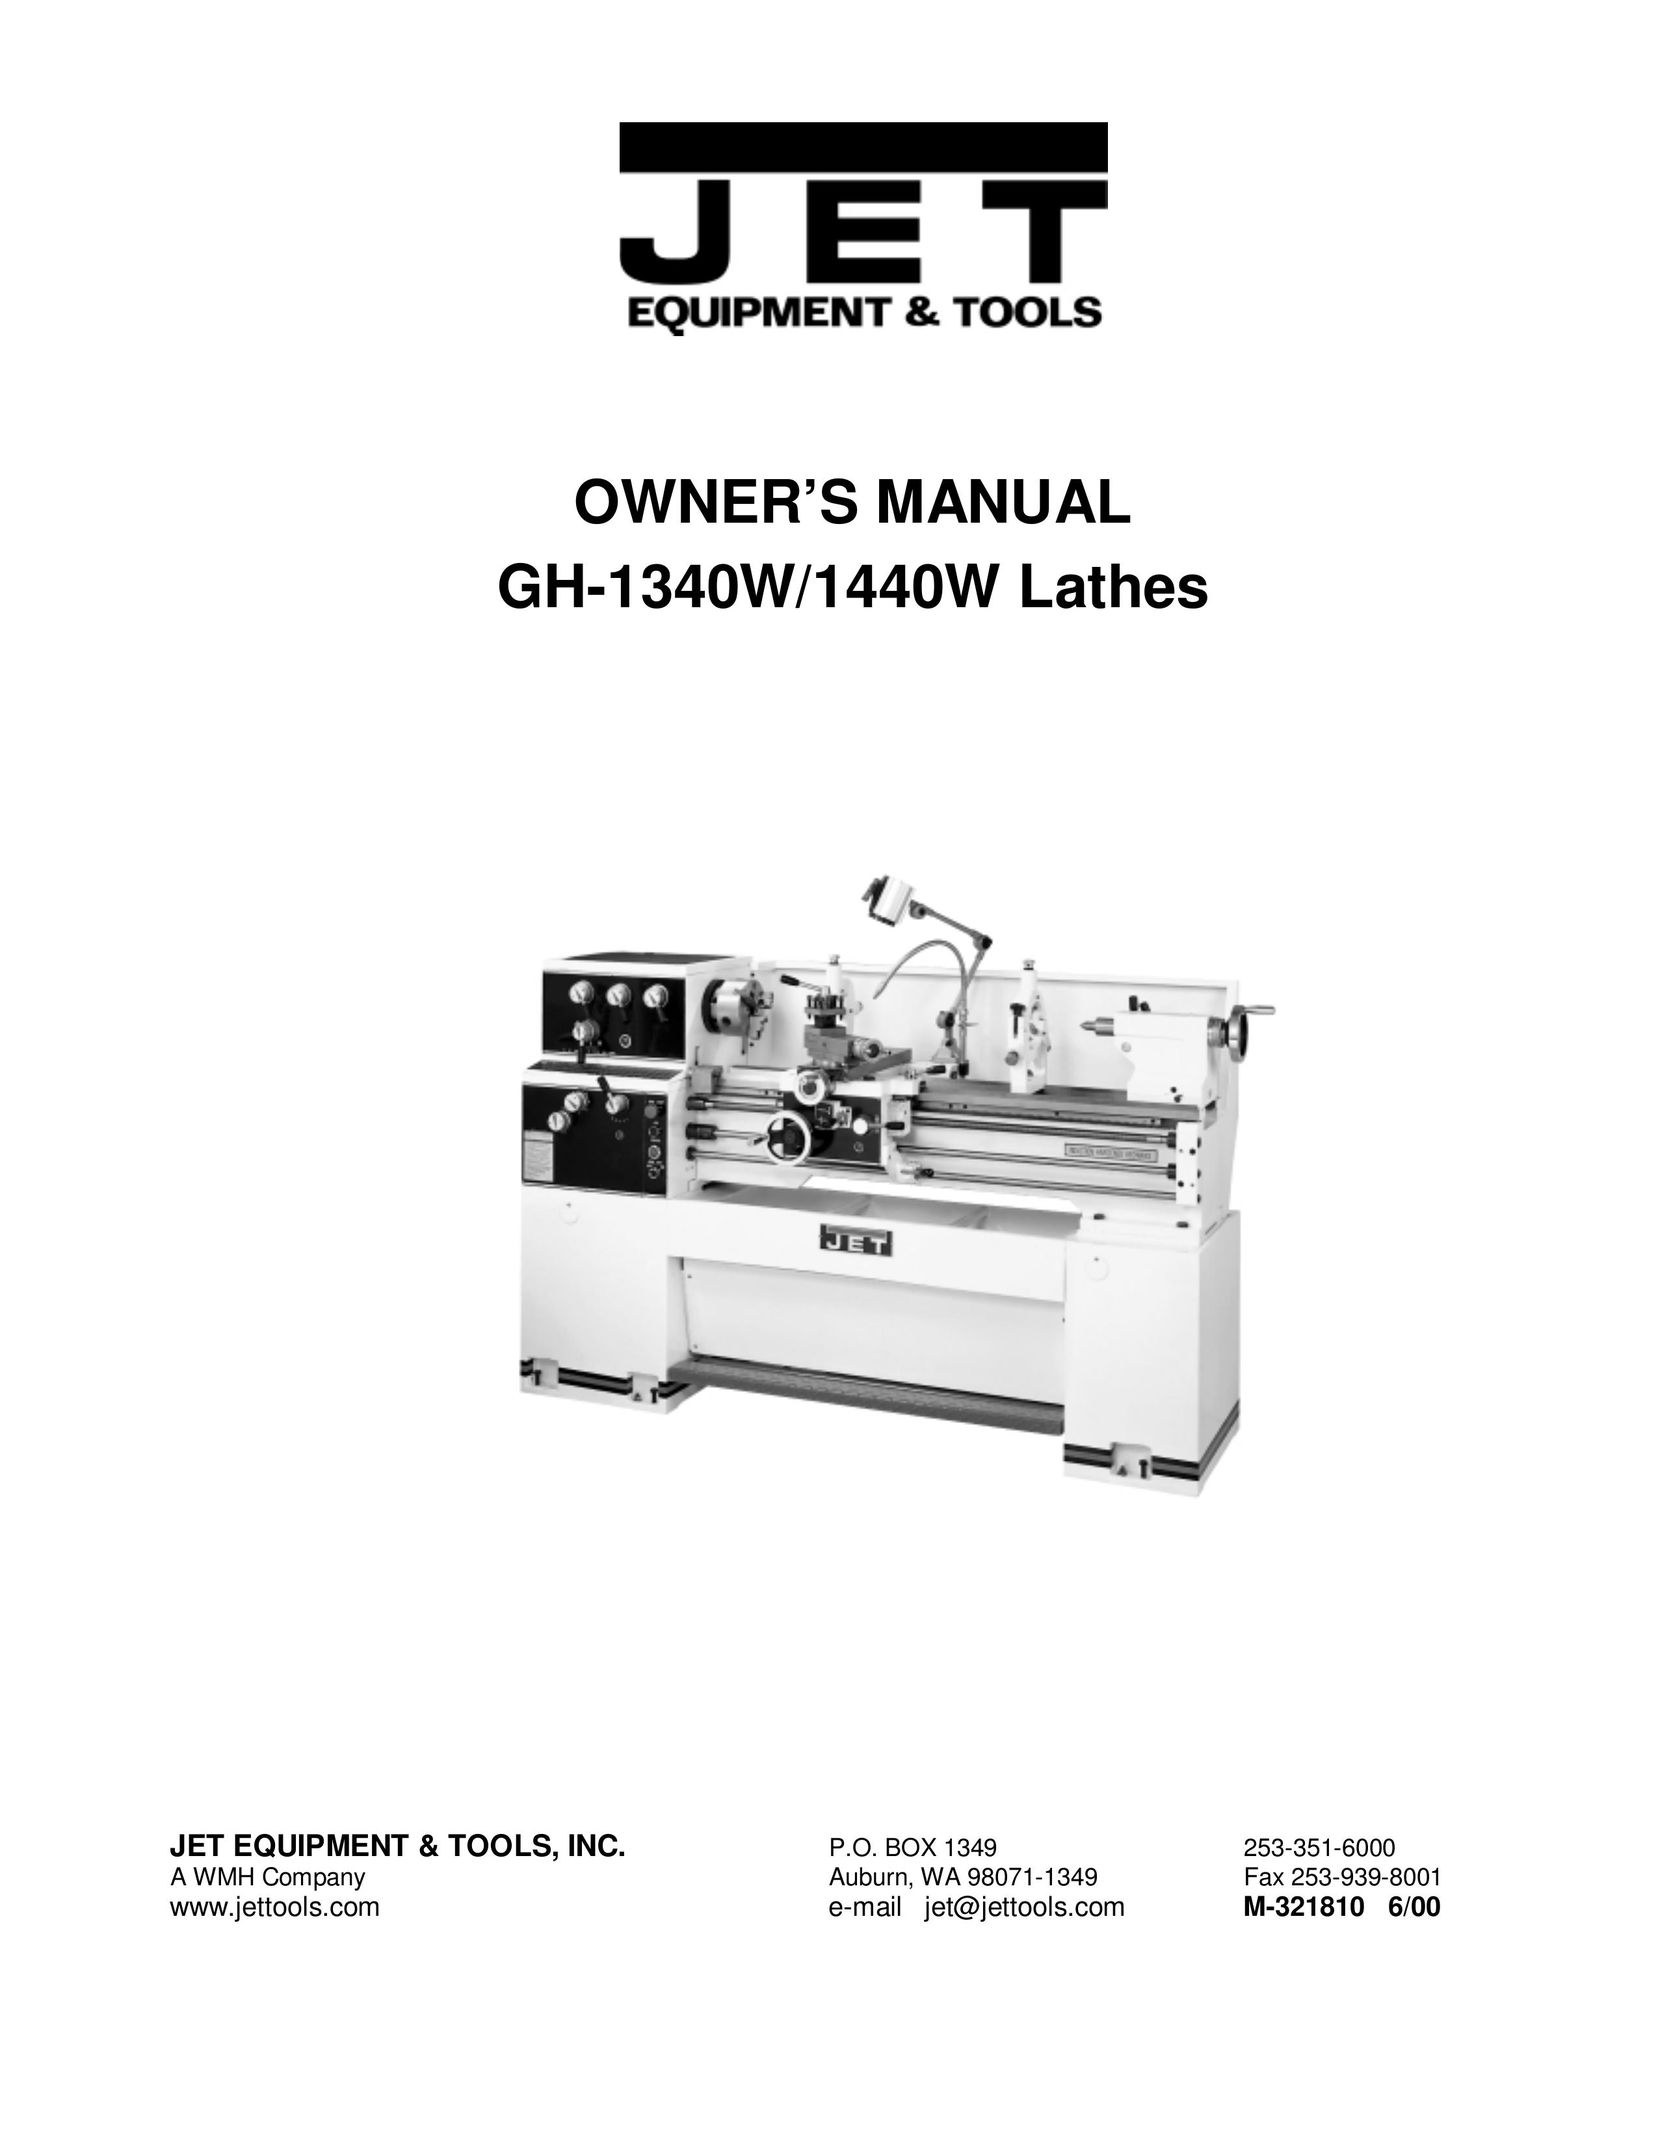 Jet Tools GH-1440W Lathe User Manual